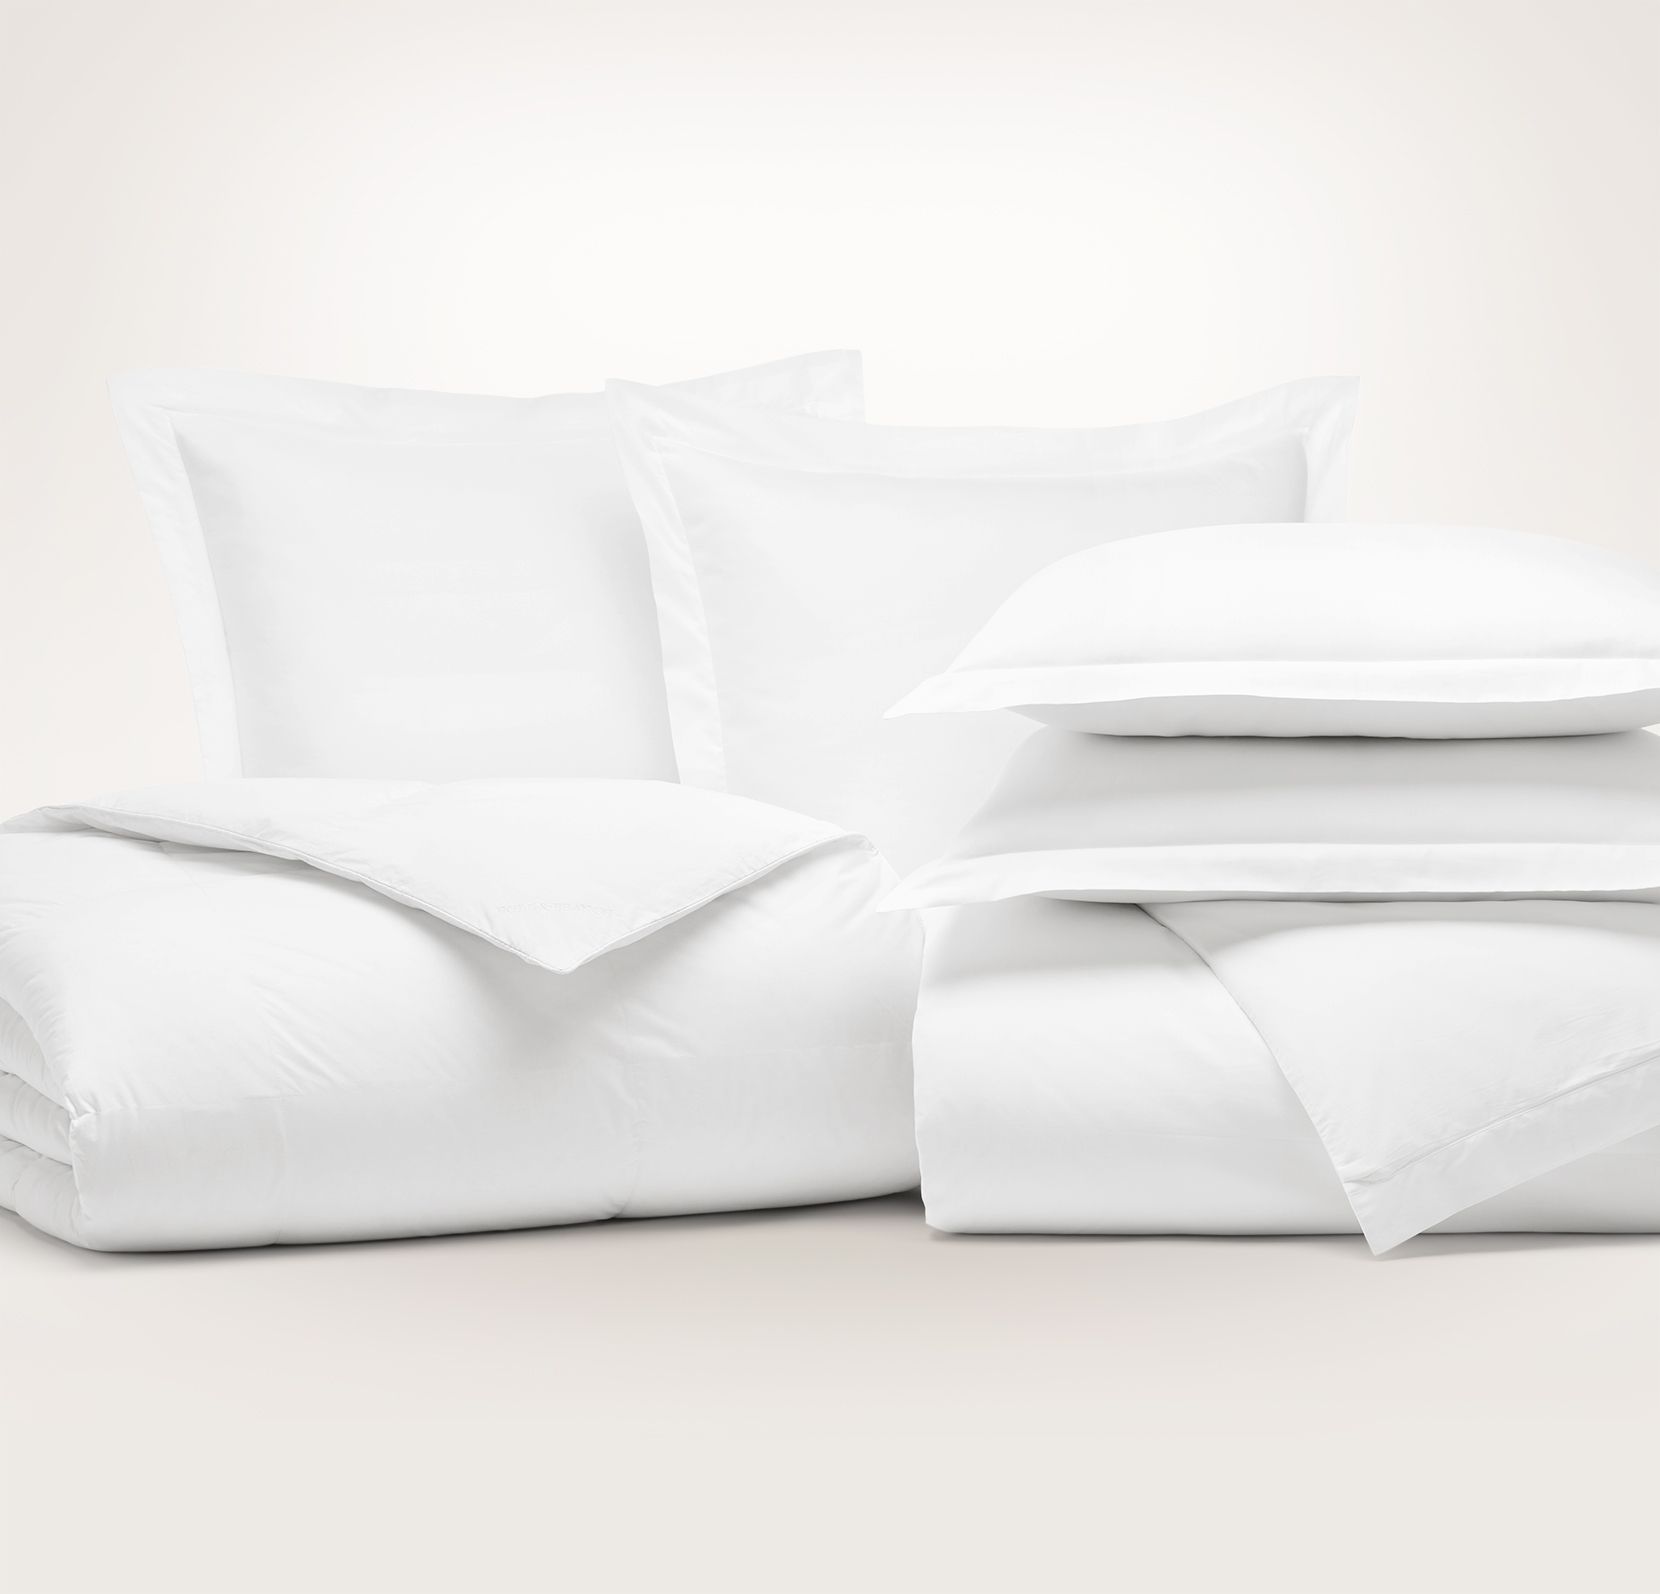 Eco-Friendly Organic Sheets & Softest Bedding | Boll & Branch ® | Boll & Branch